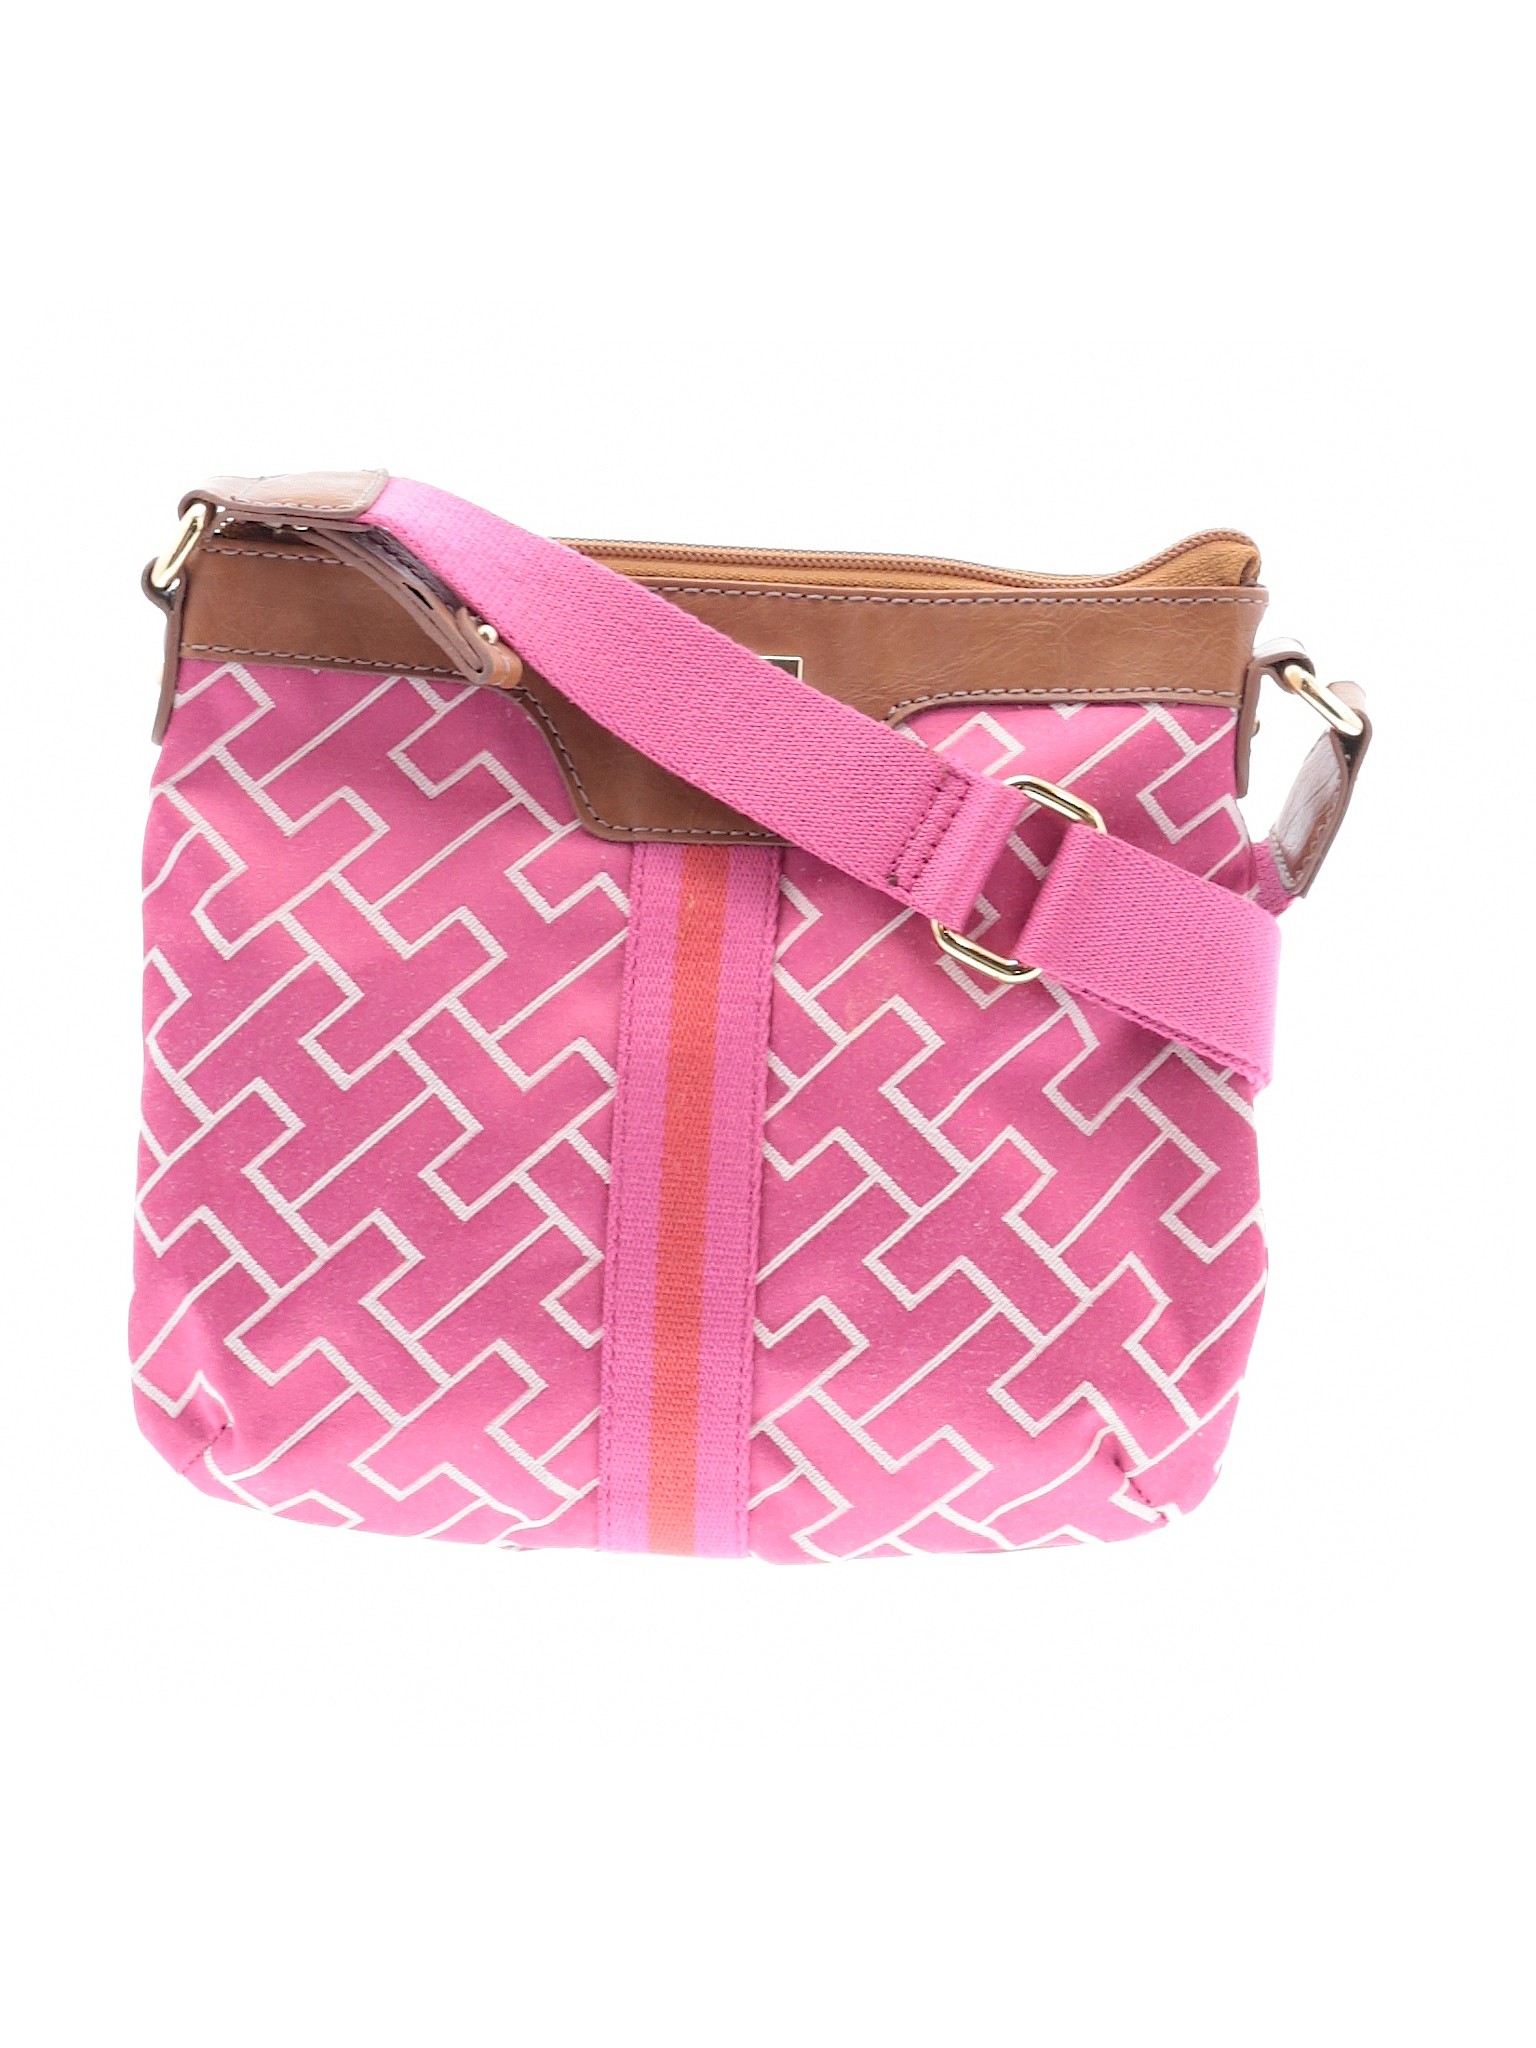 Tommy Hilfiger Women Pink Crossbody Bag One Size | eBay